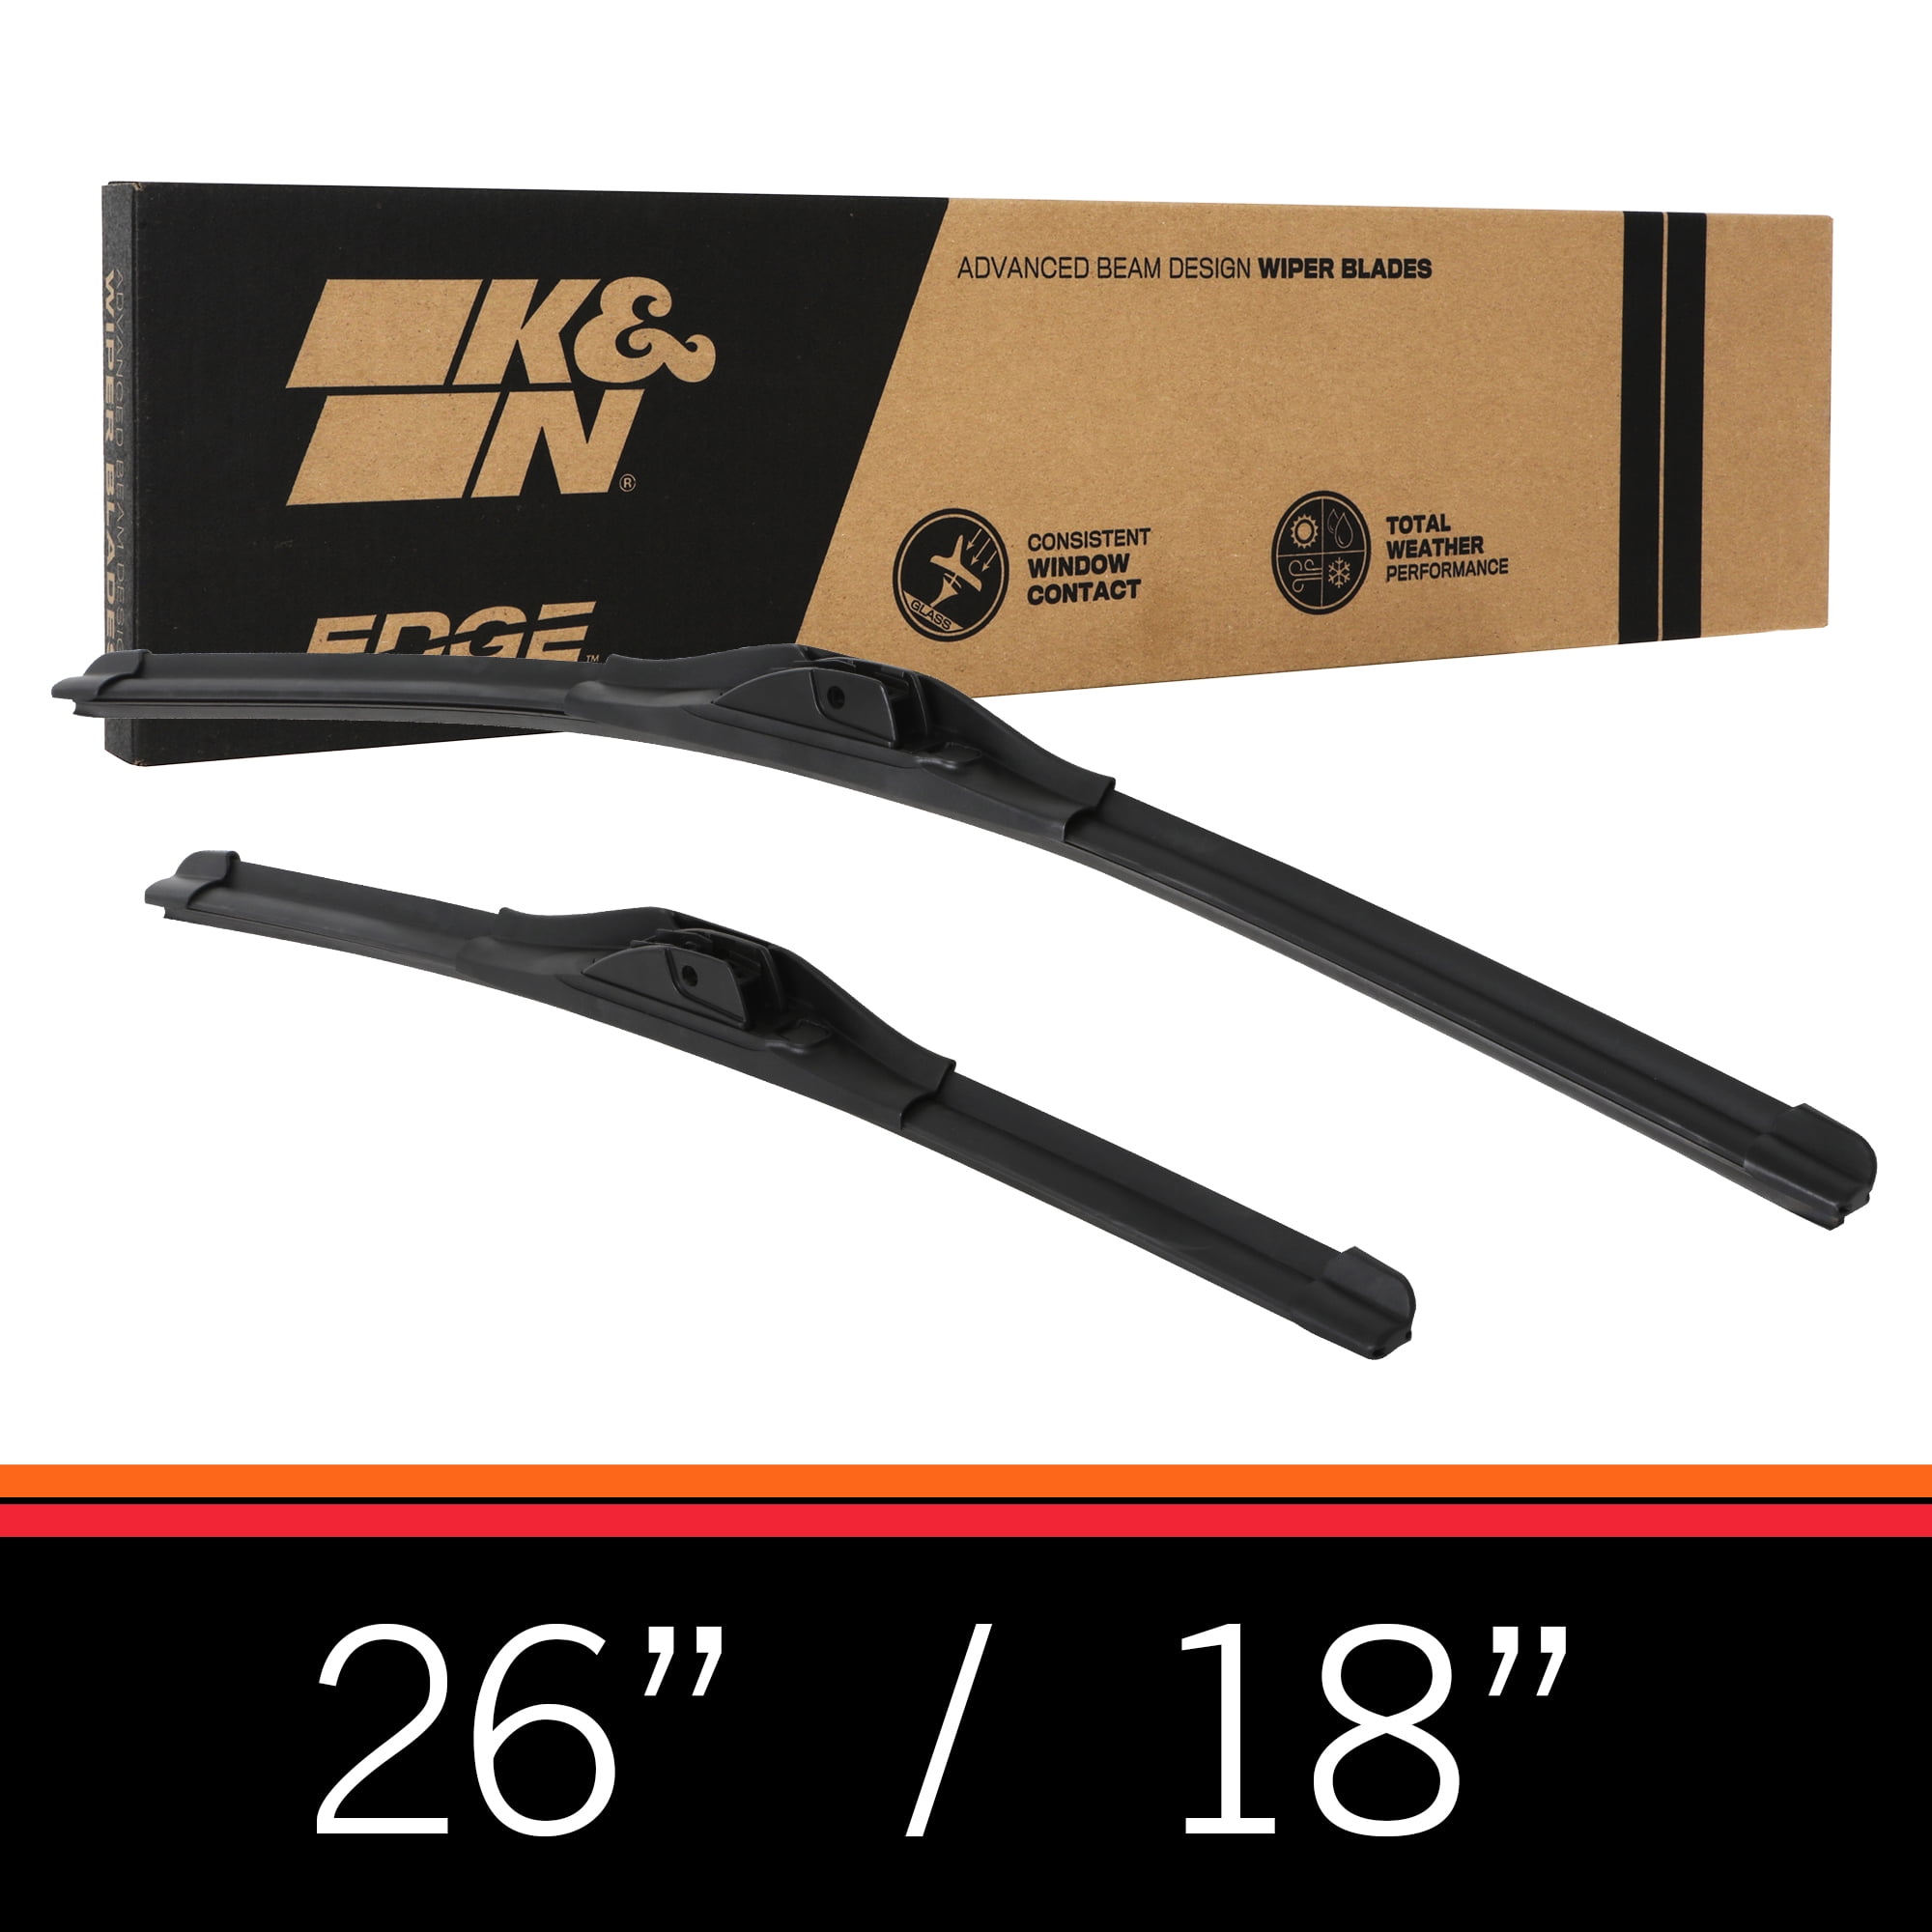 K&N EDGE All Weather Performance Wiper Blade 26"/18" (Pack of 2)